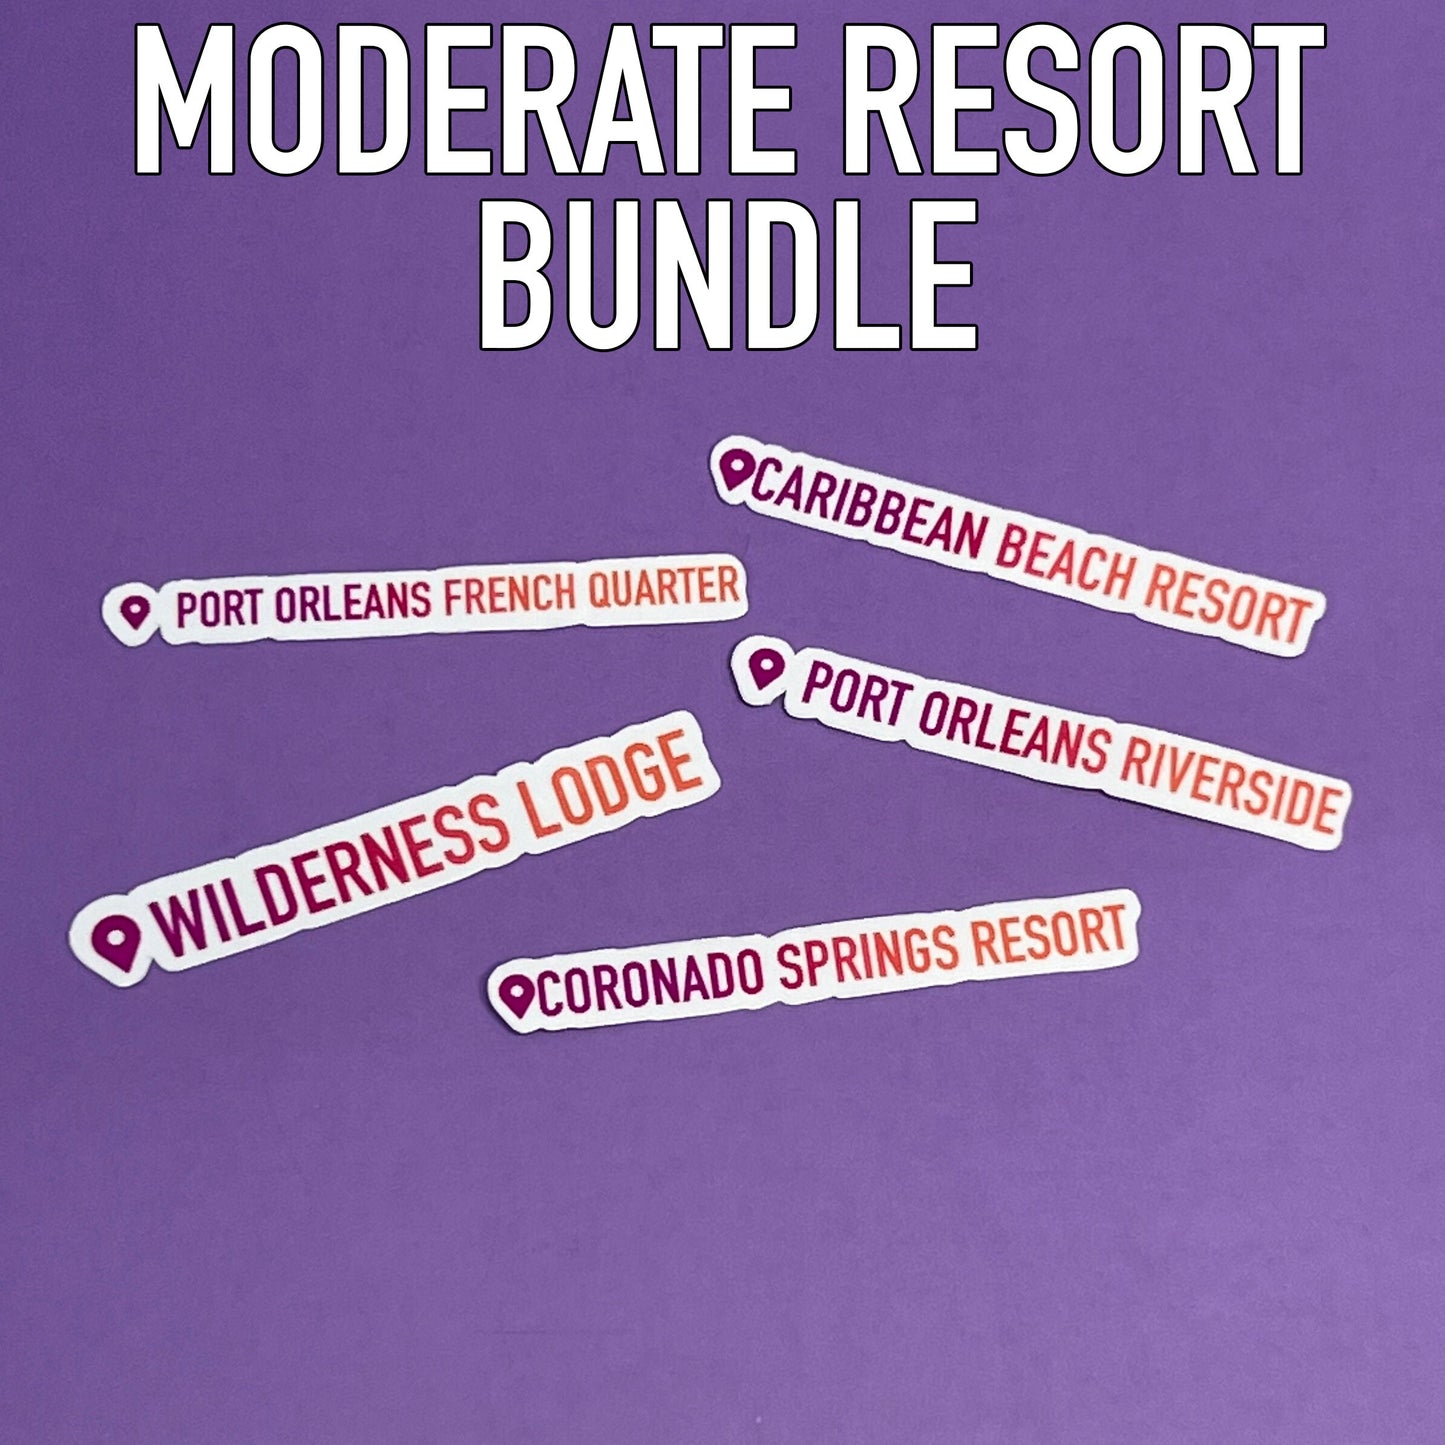 Where I've Been - Disney Moderate Resort Bundle | Waterproof Stickers